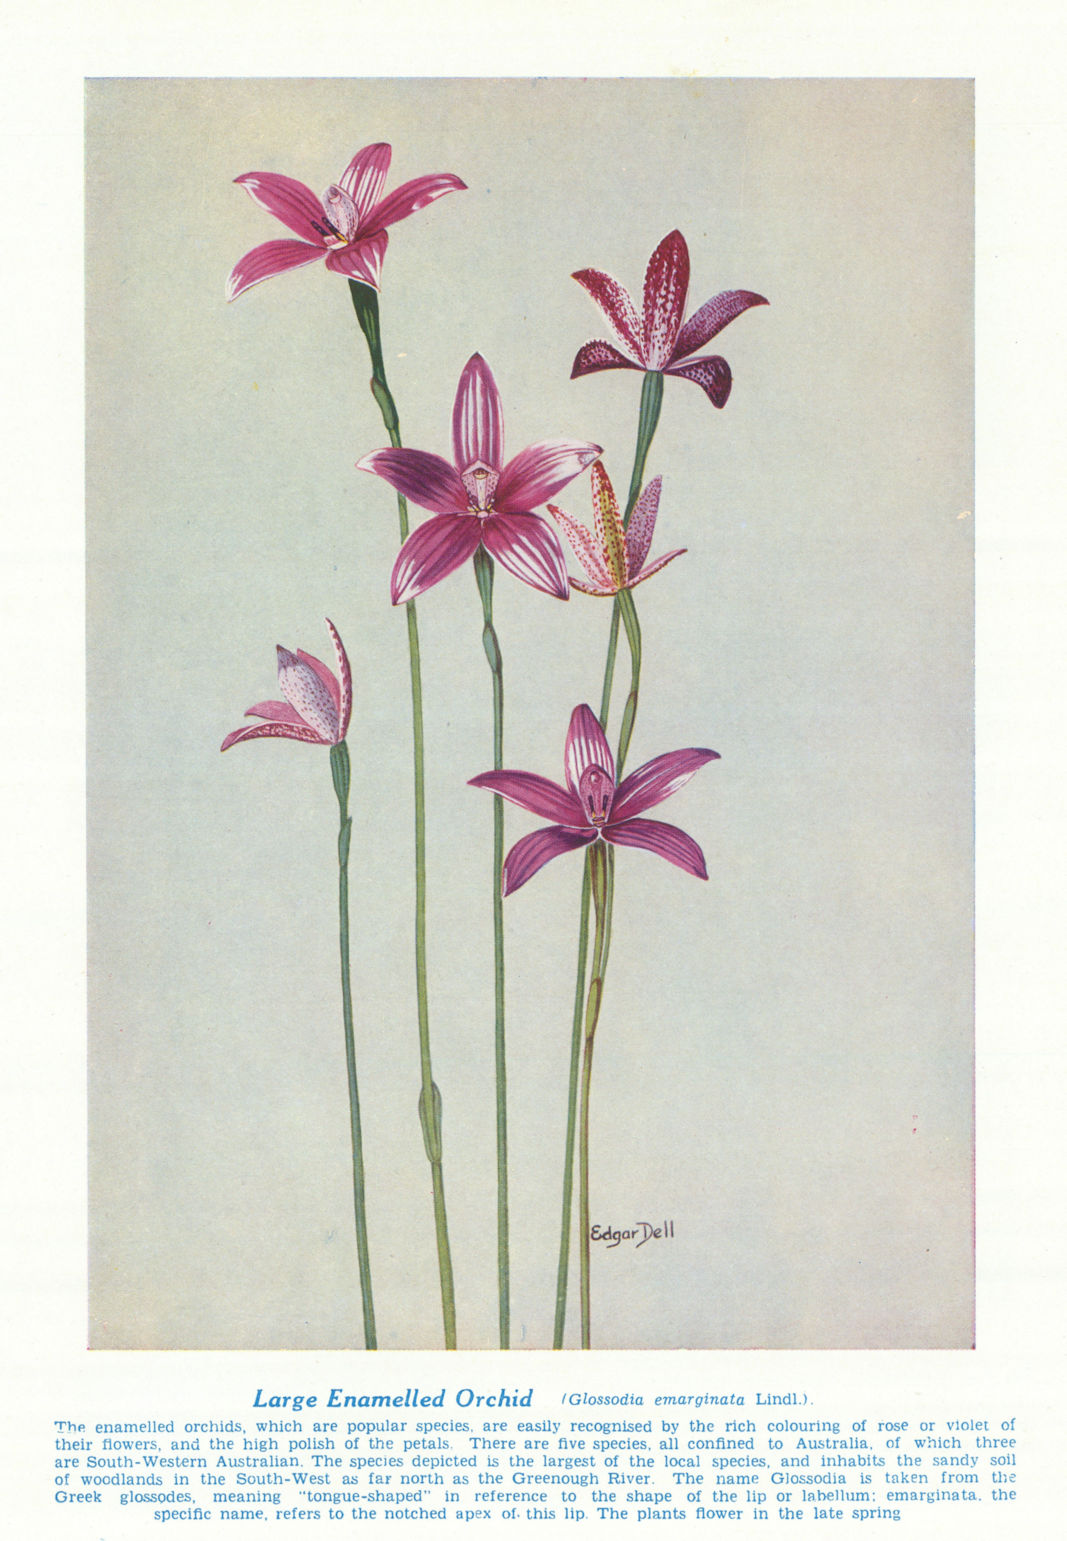 Associate Product Large Enamelled Orchid (Glossodiae marginata). West Australian Wild Flowers 1950